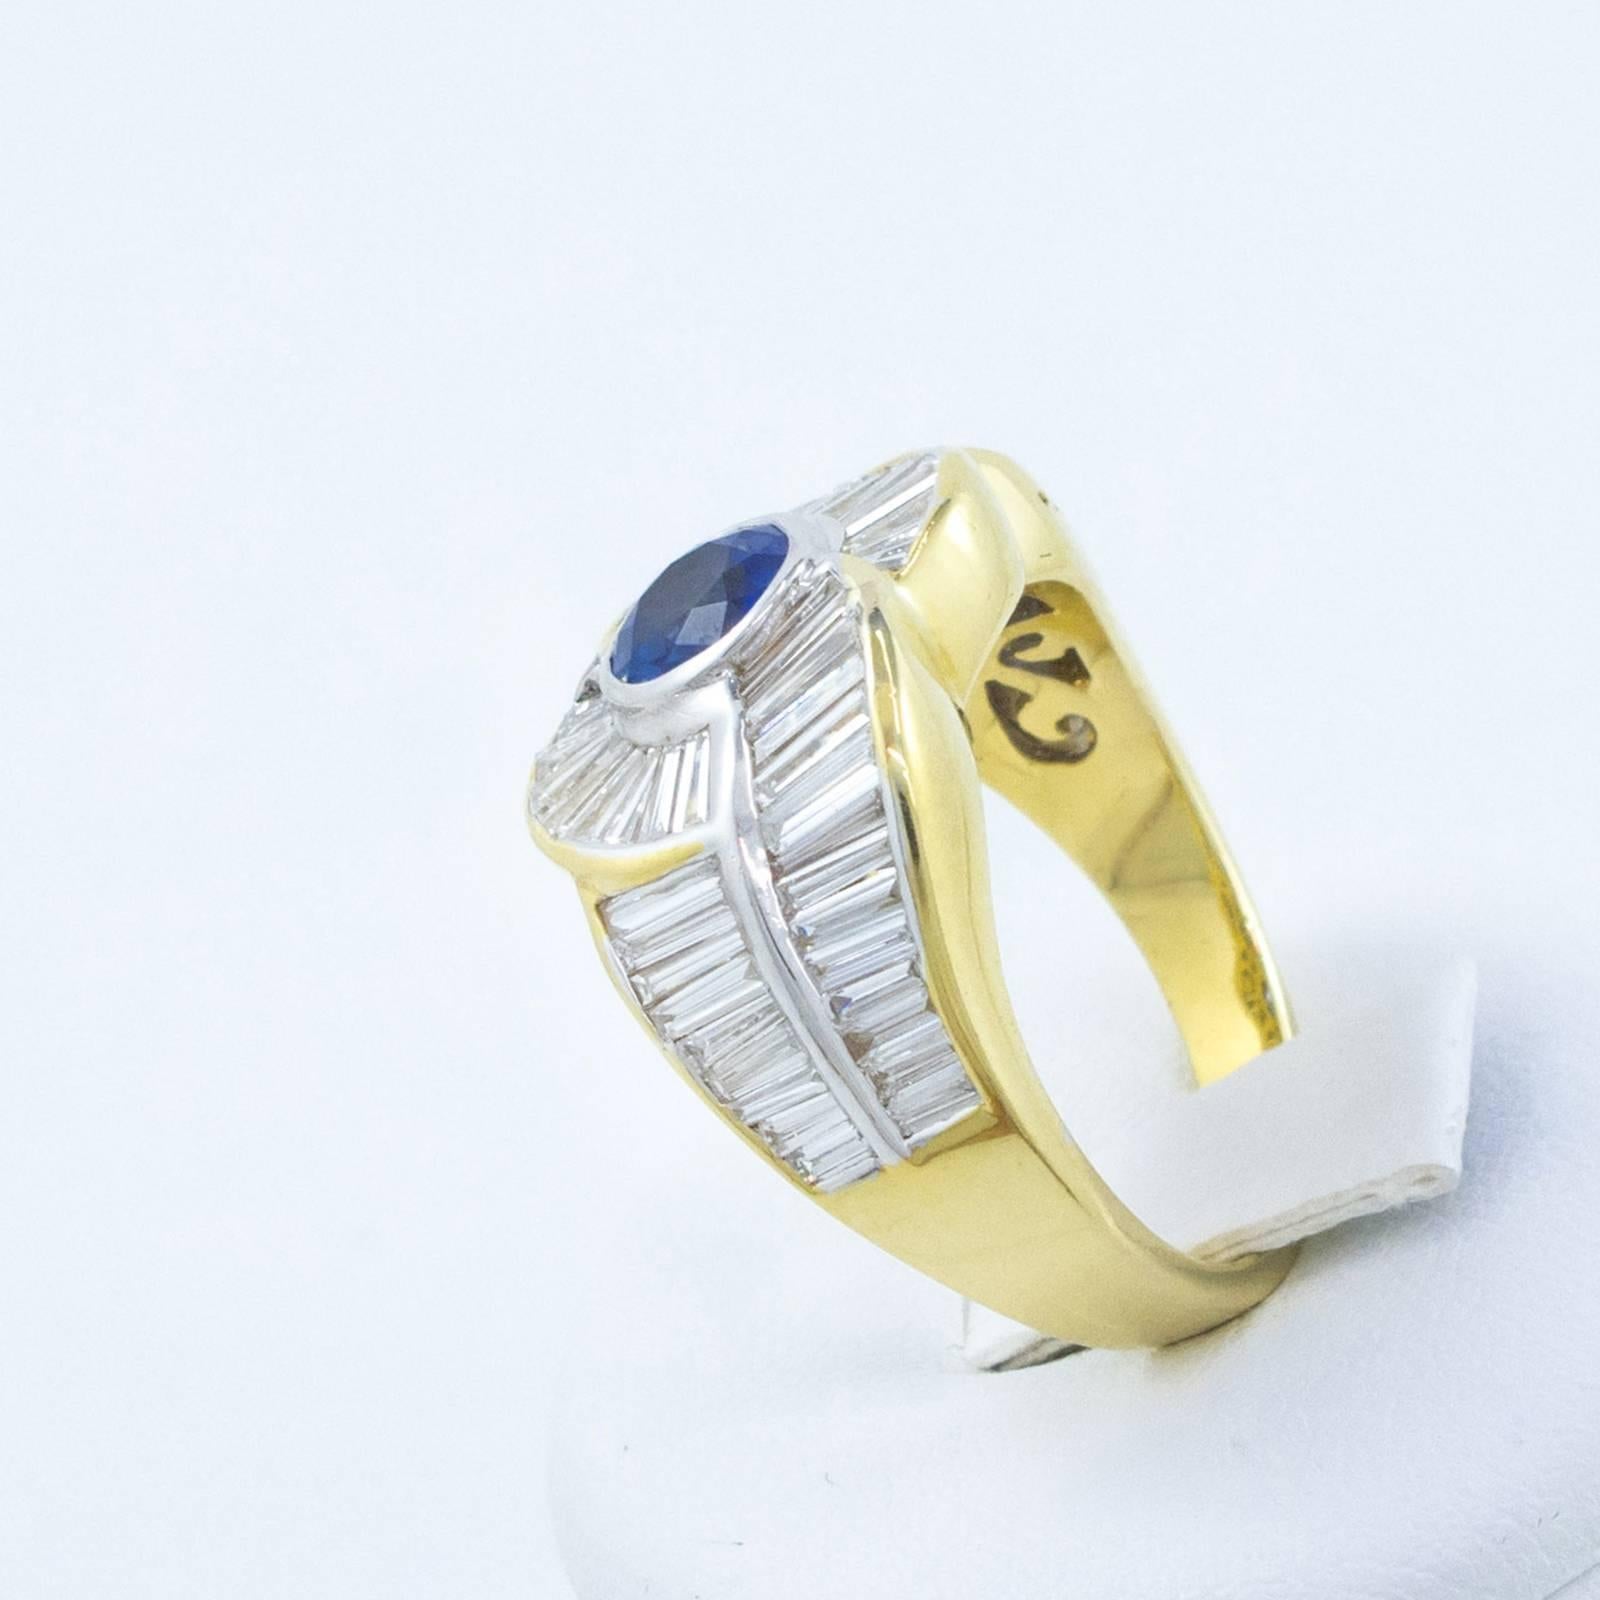 Striking 7.92 Carat Diamond Sapphire Ring For Sale 2